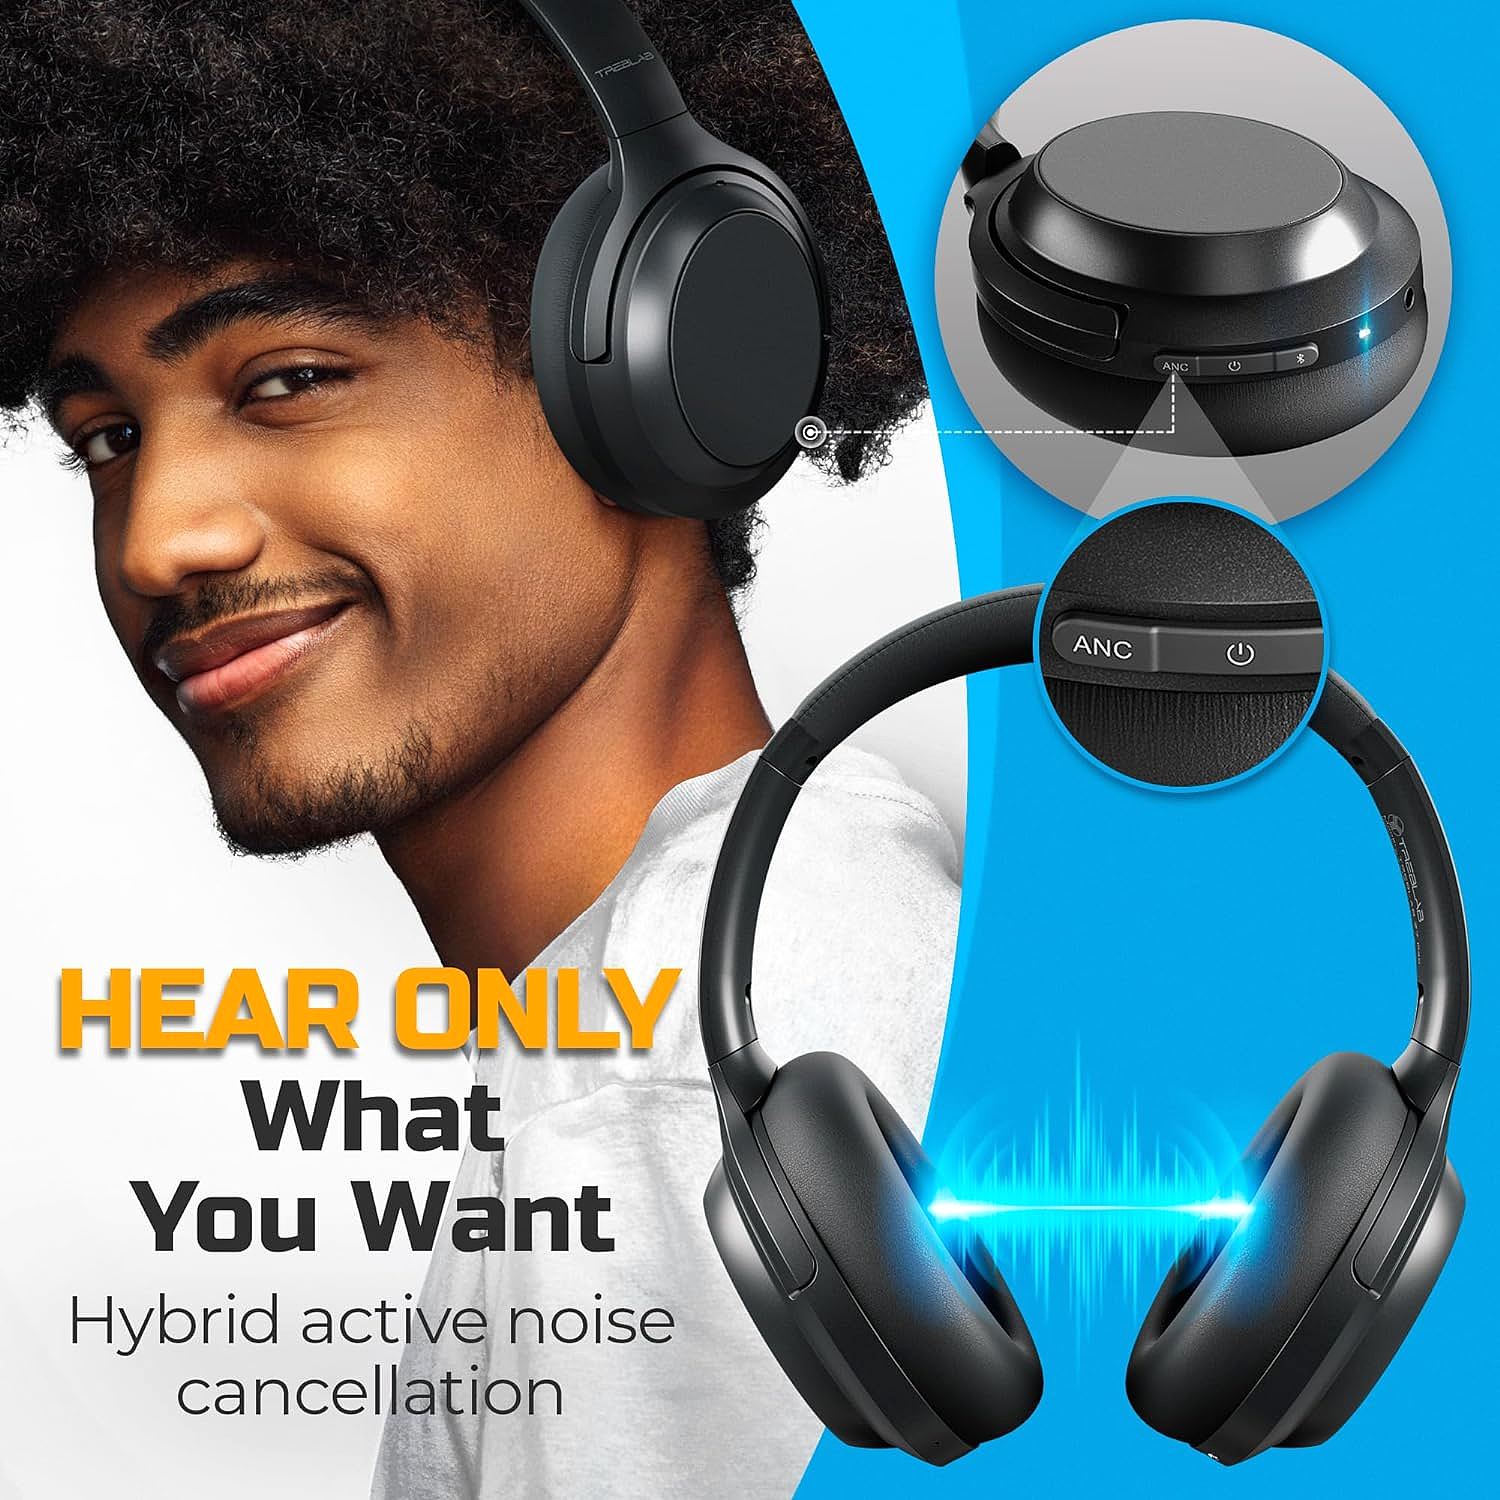  TREBLAB Z7 PRO Hybrid Active Noise Cancelling Headphones   